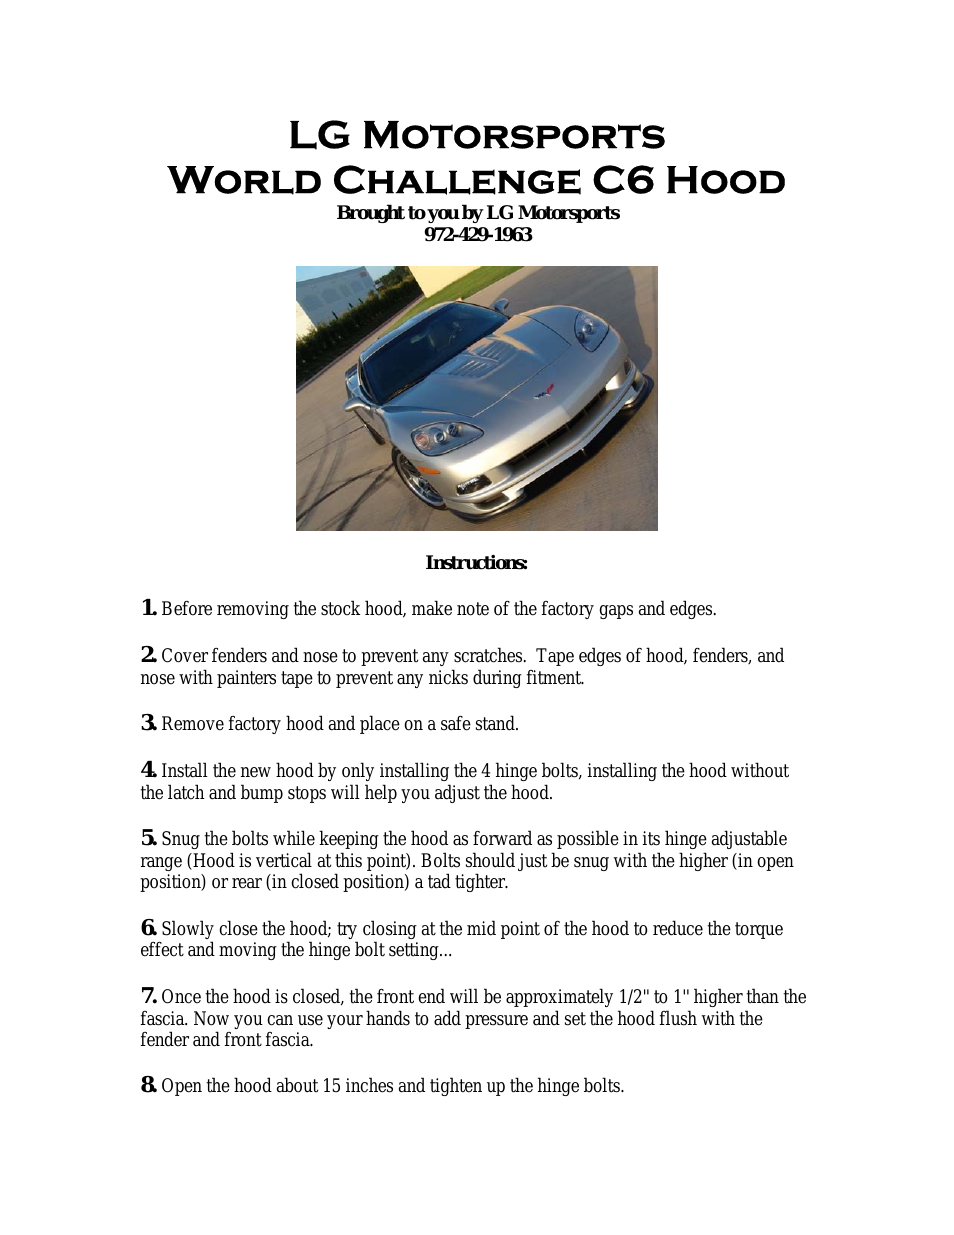 LG C6 World Challenge Hood